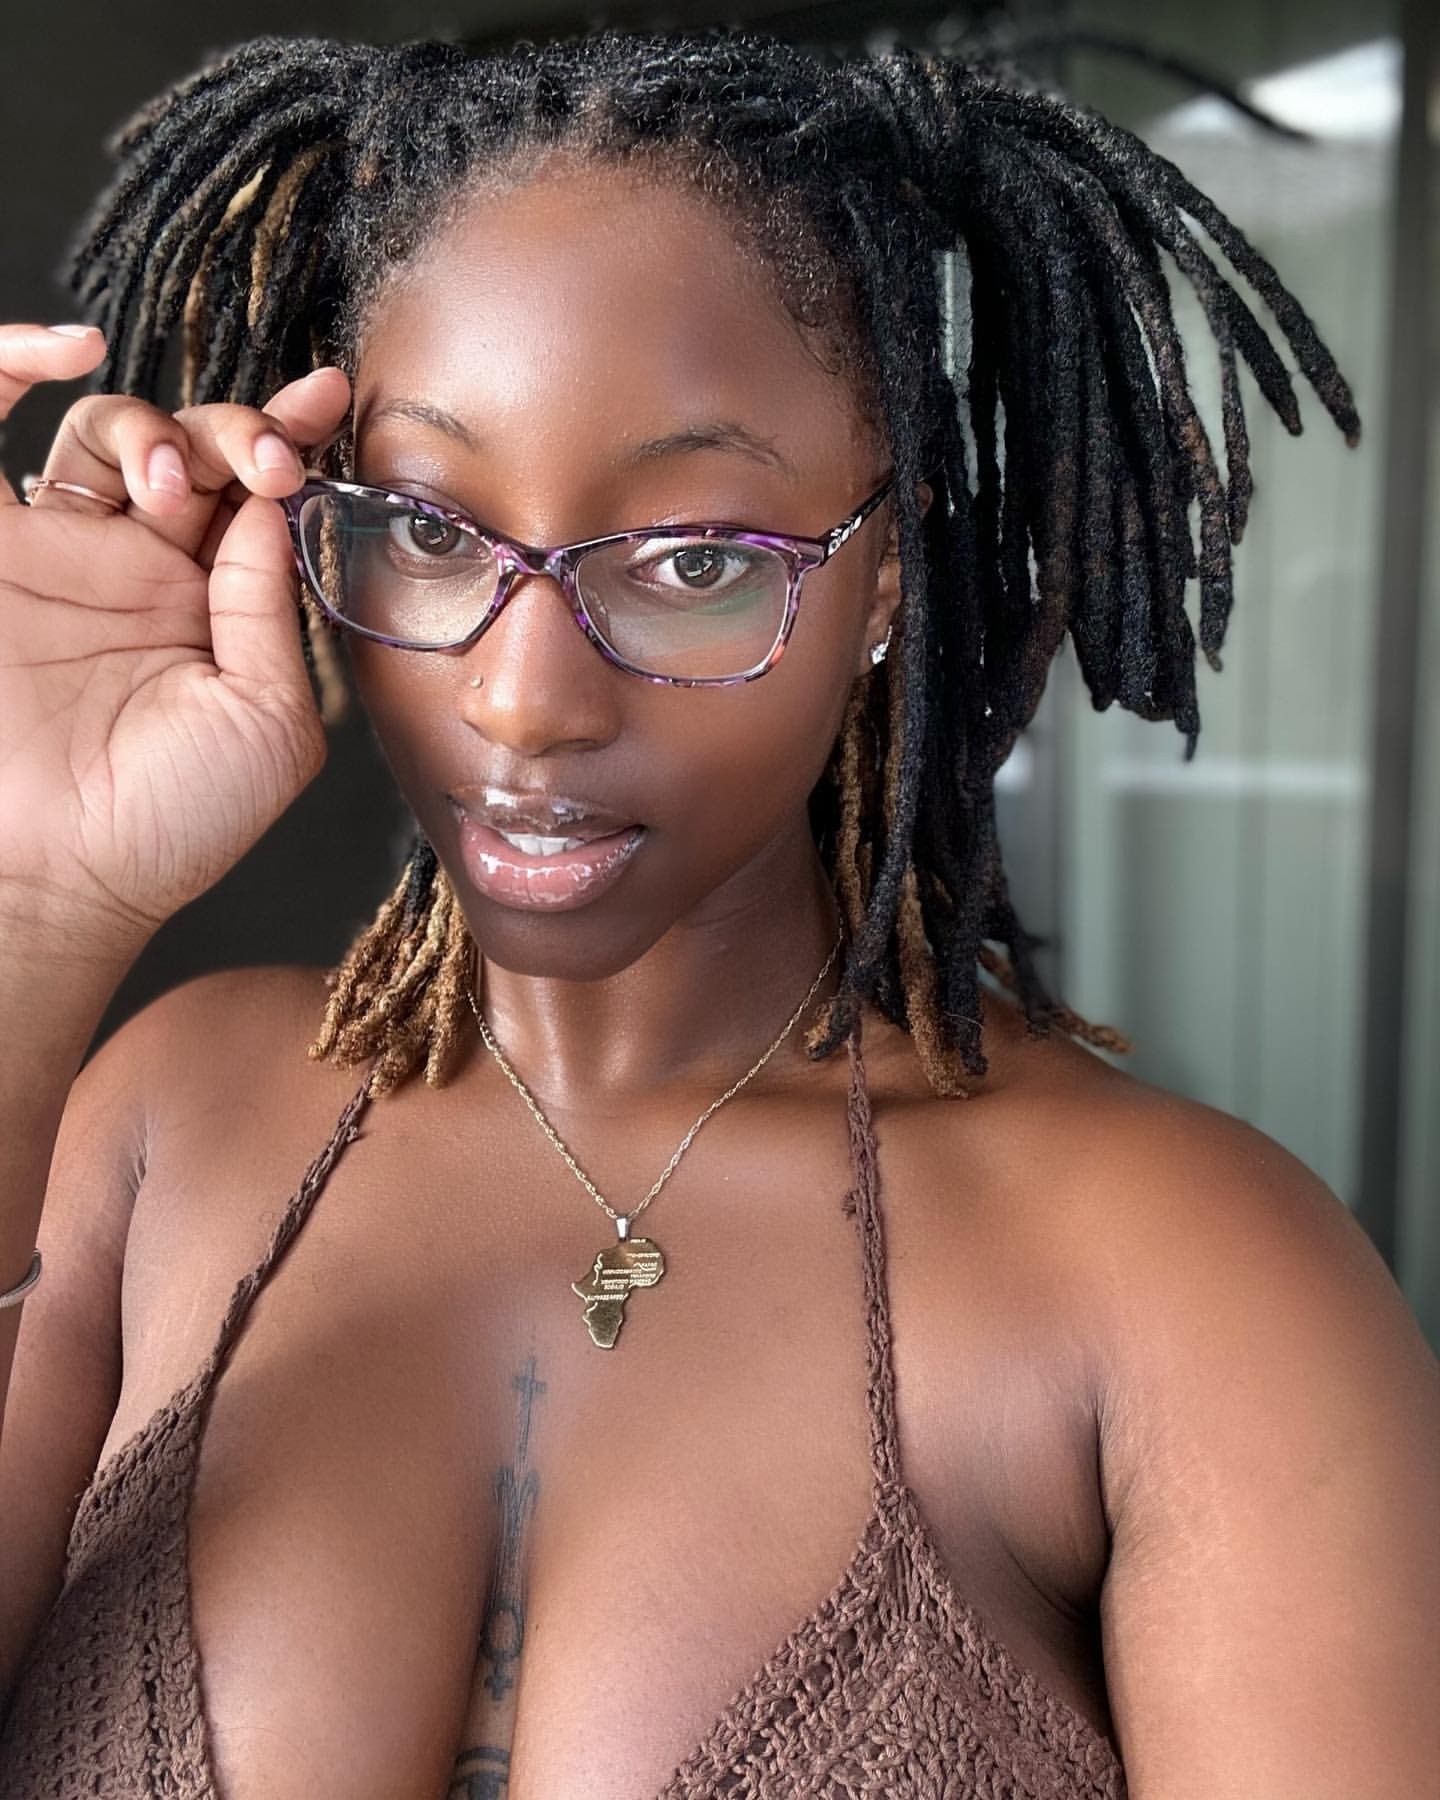 Sex blackwomeneverything2:@thelanyamarie pictures